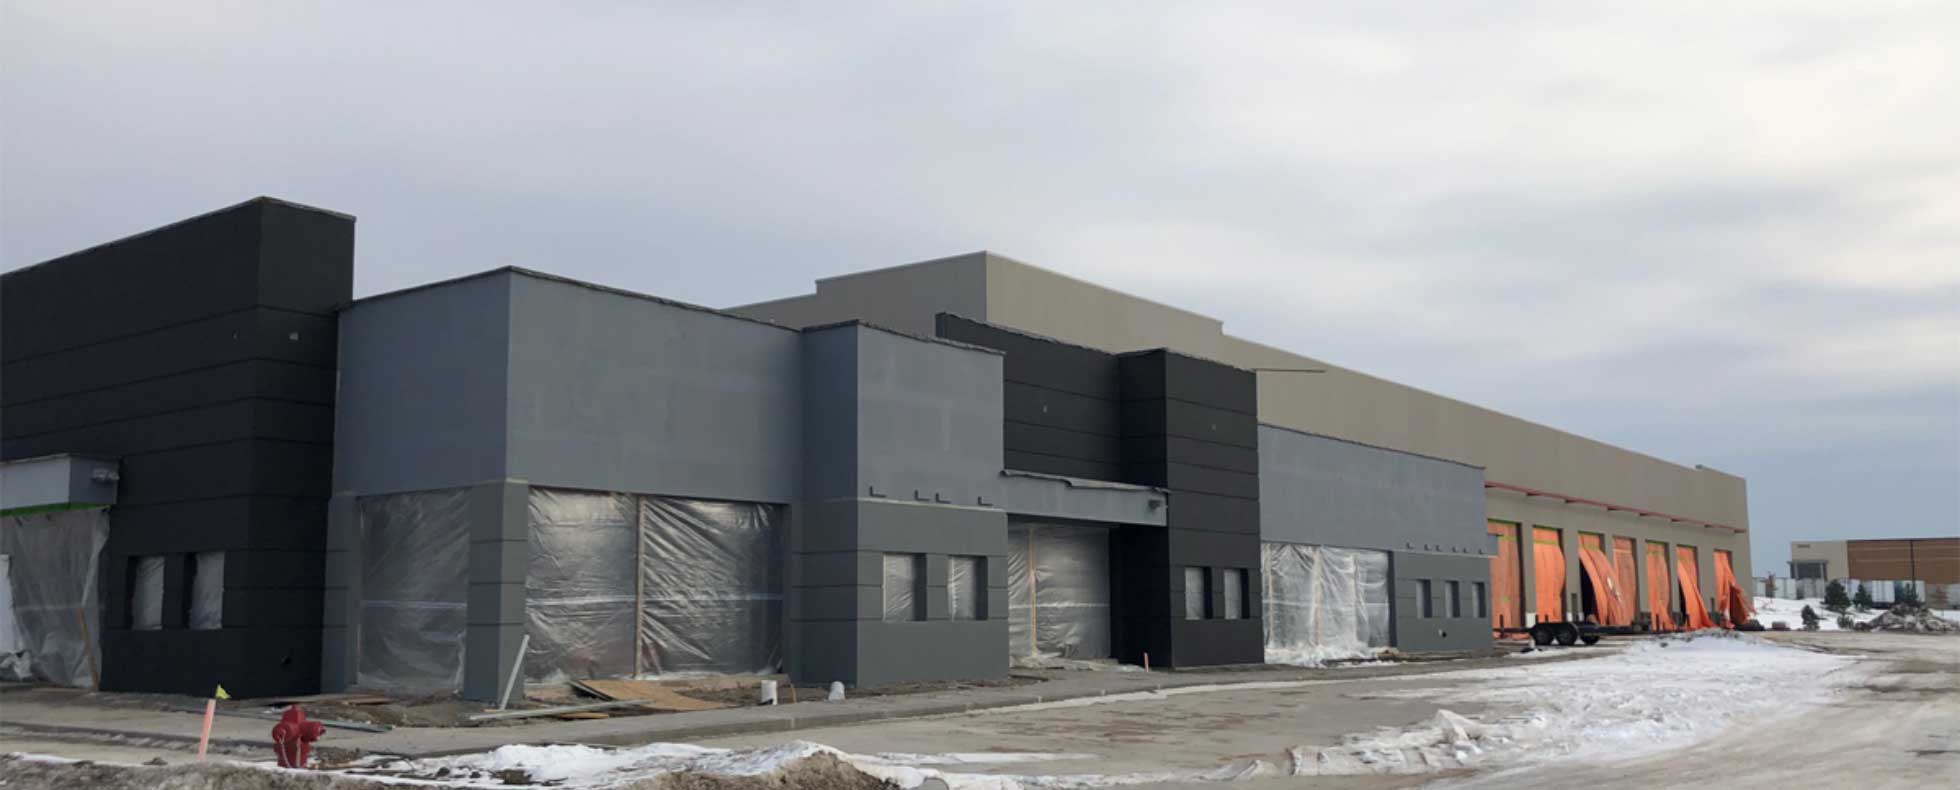 Construction Update: January Progress of RDO Equipment Co. in Dayton, MN